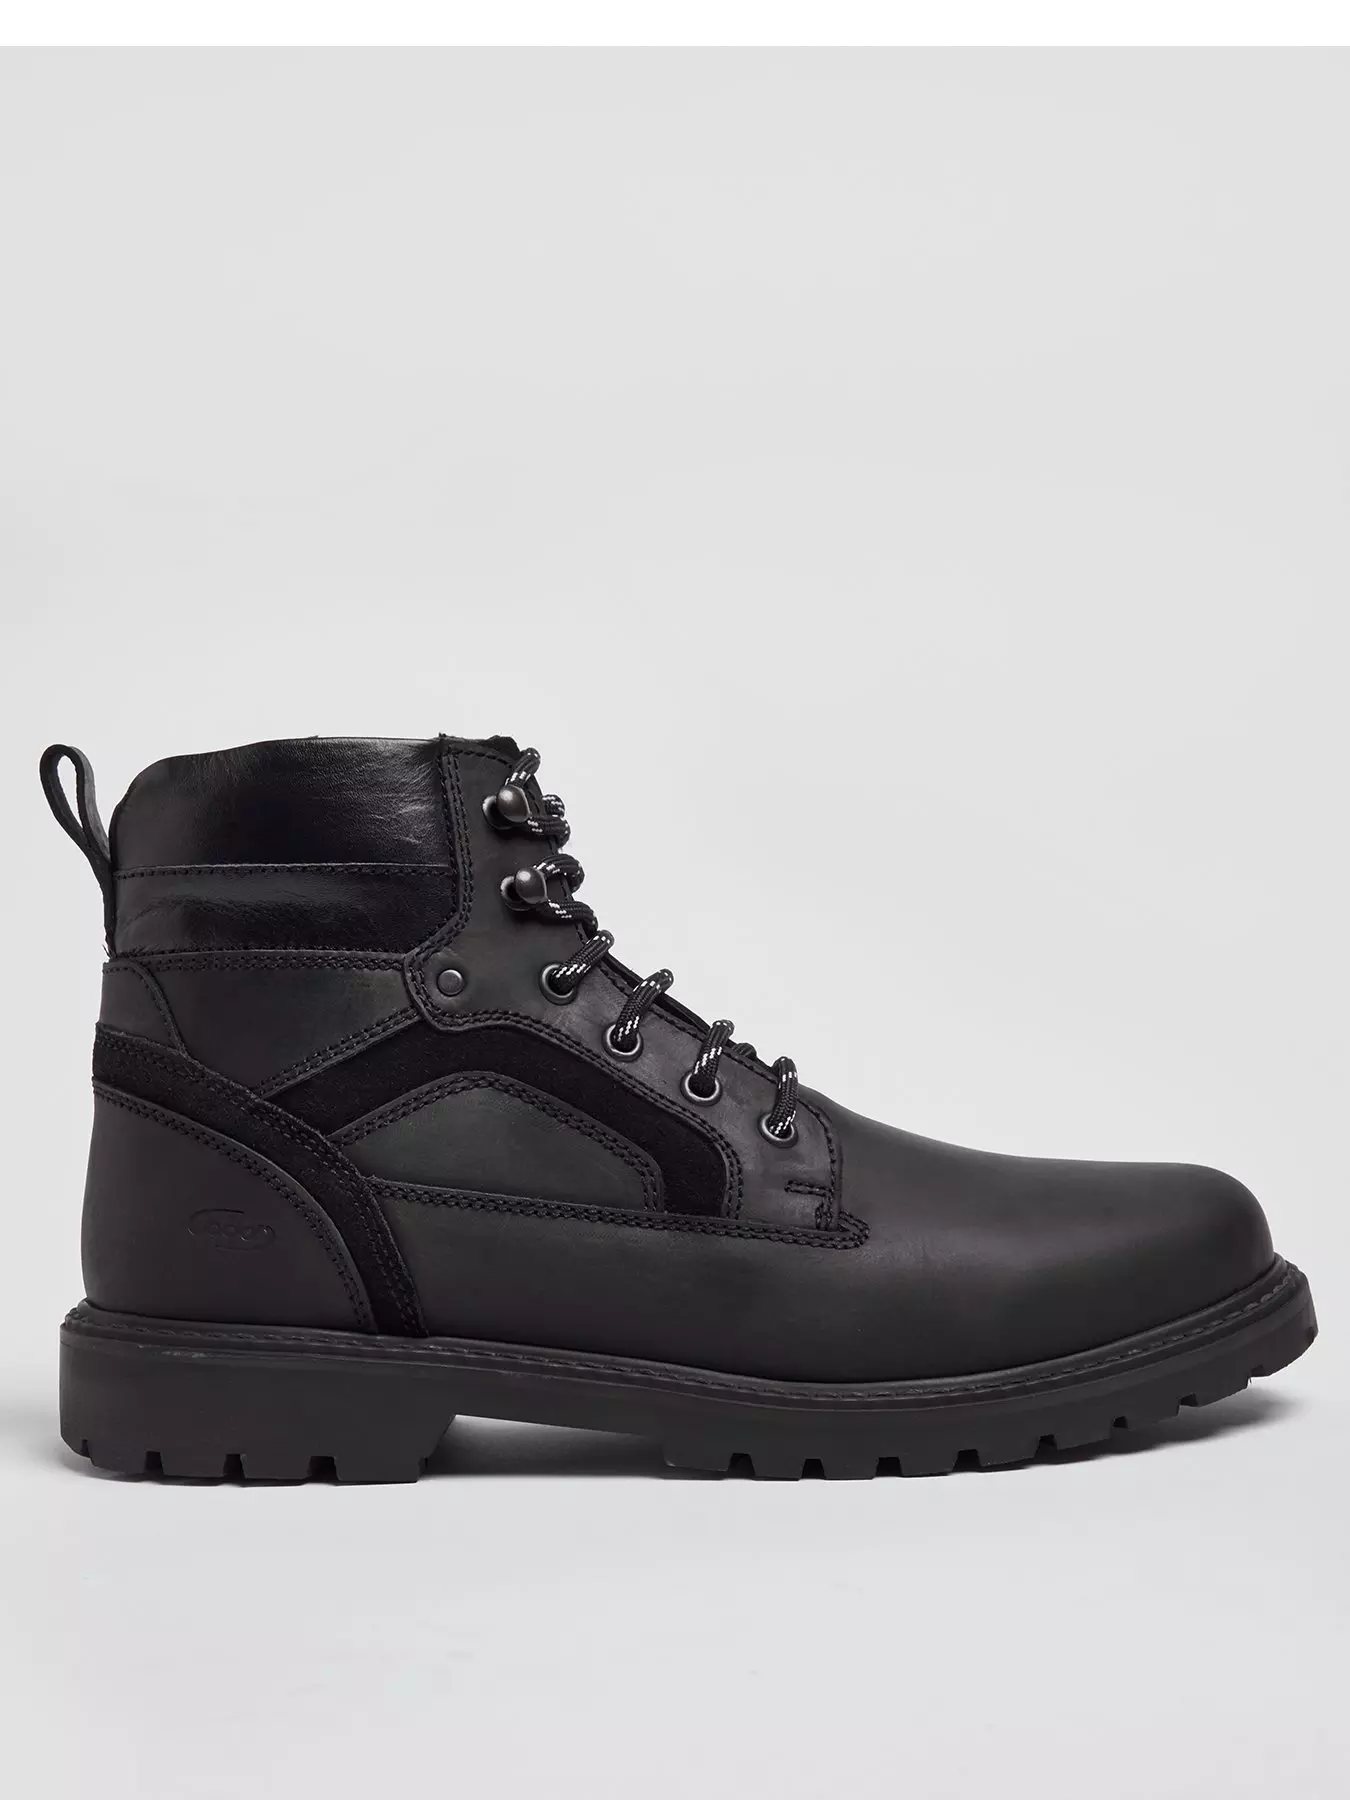 https://media.very.ie/i/littlewoodsireland/UYVS6_SQ1_0000000004_BLACK_SLs/pod-pod-oliver-black-leather-boots.jpg?$180x240_retinamobilex2$&fmt=webp